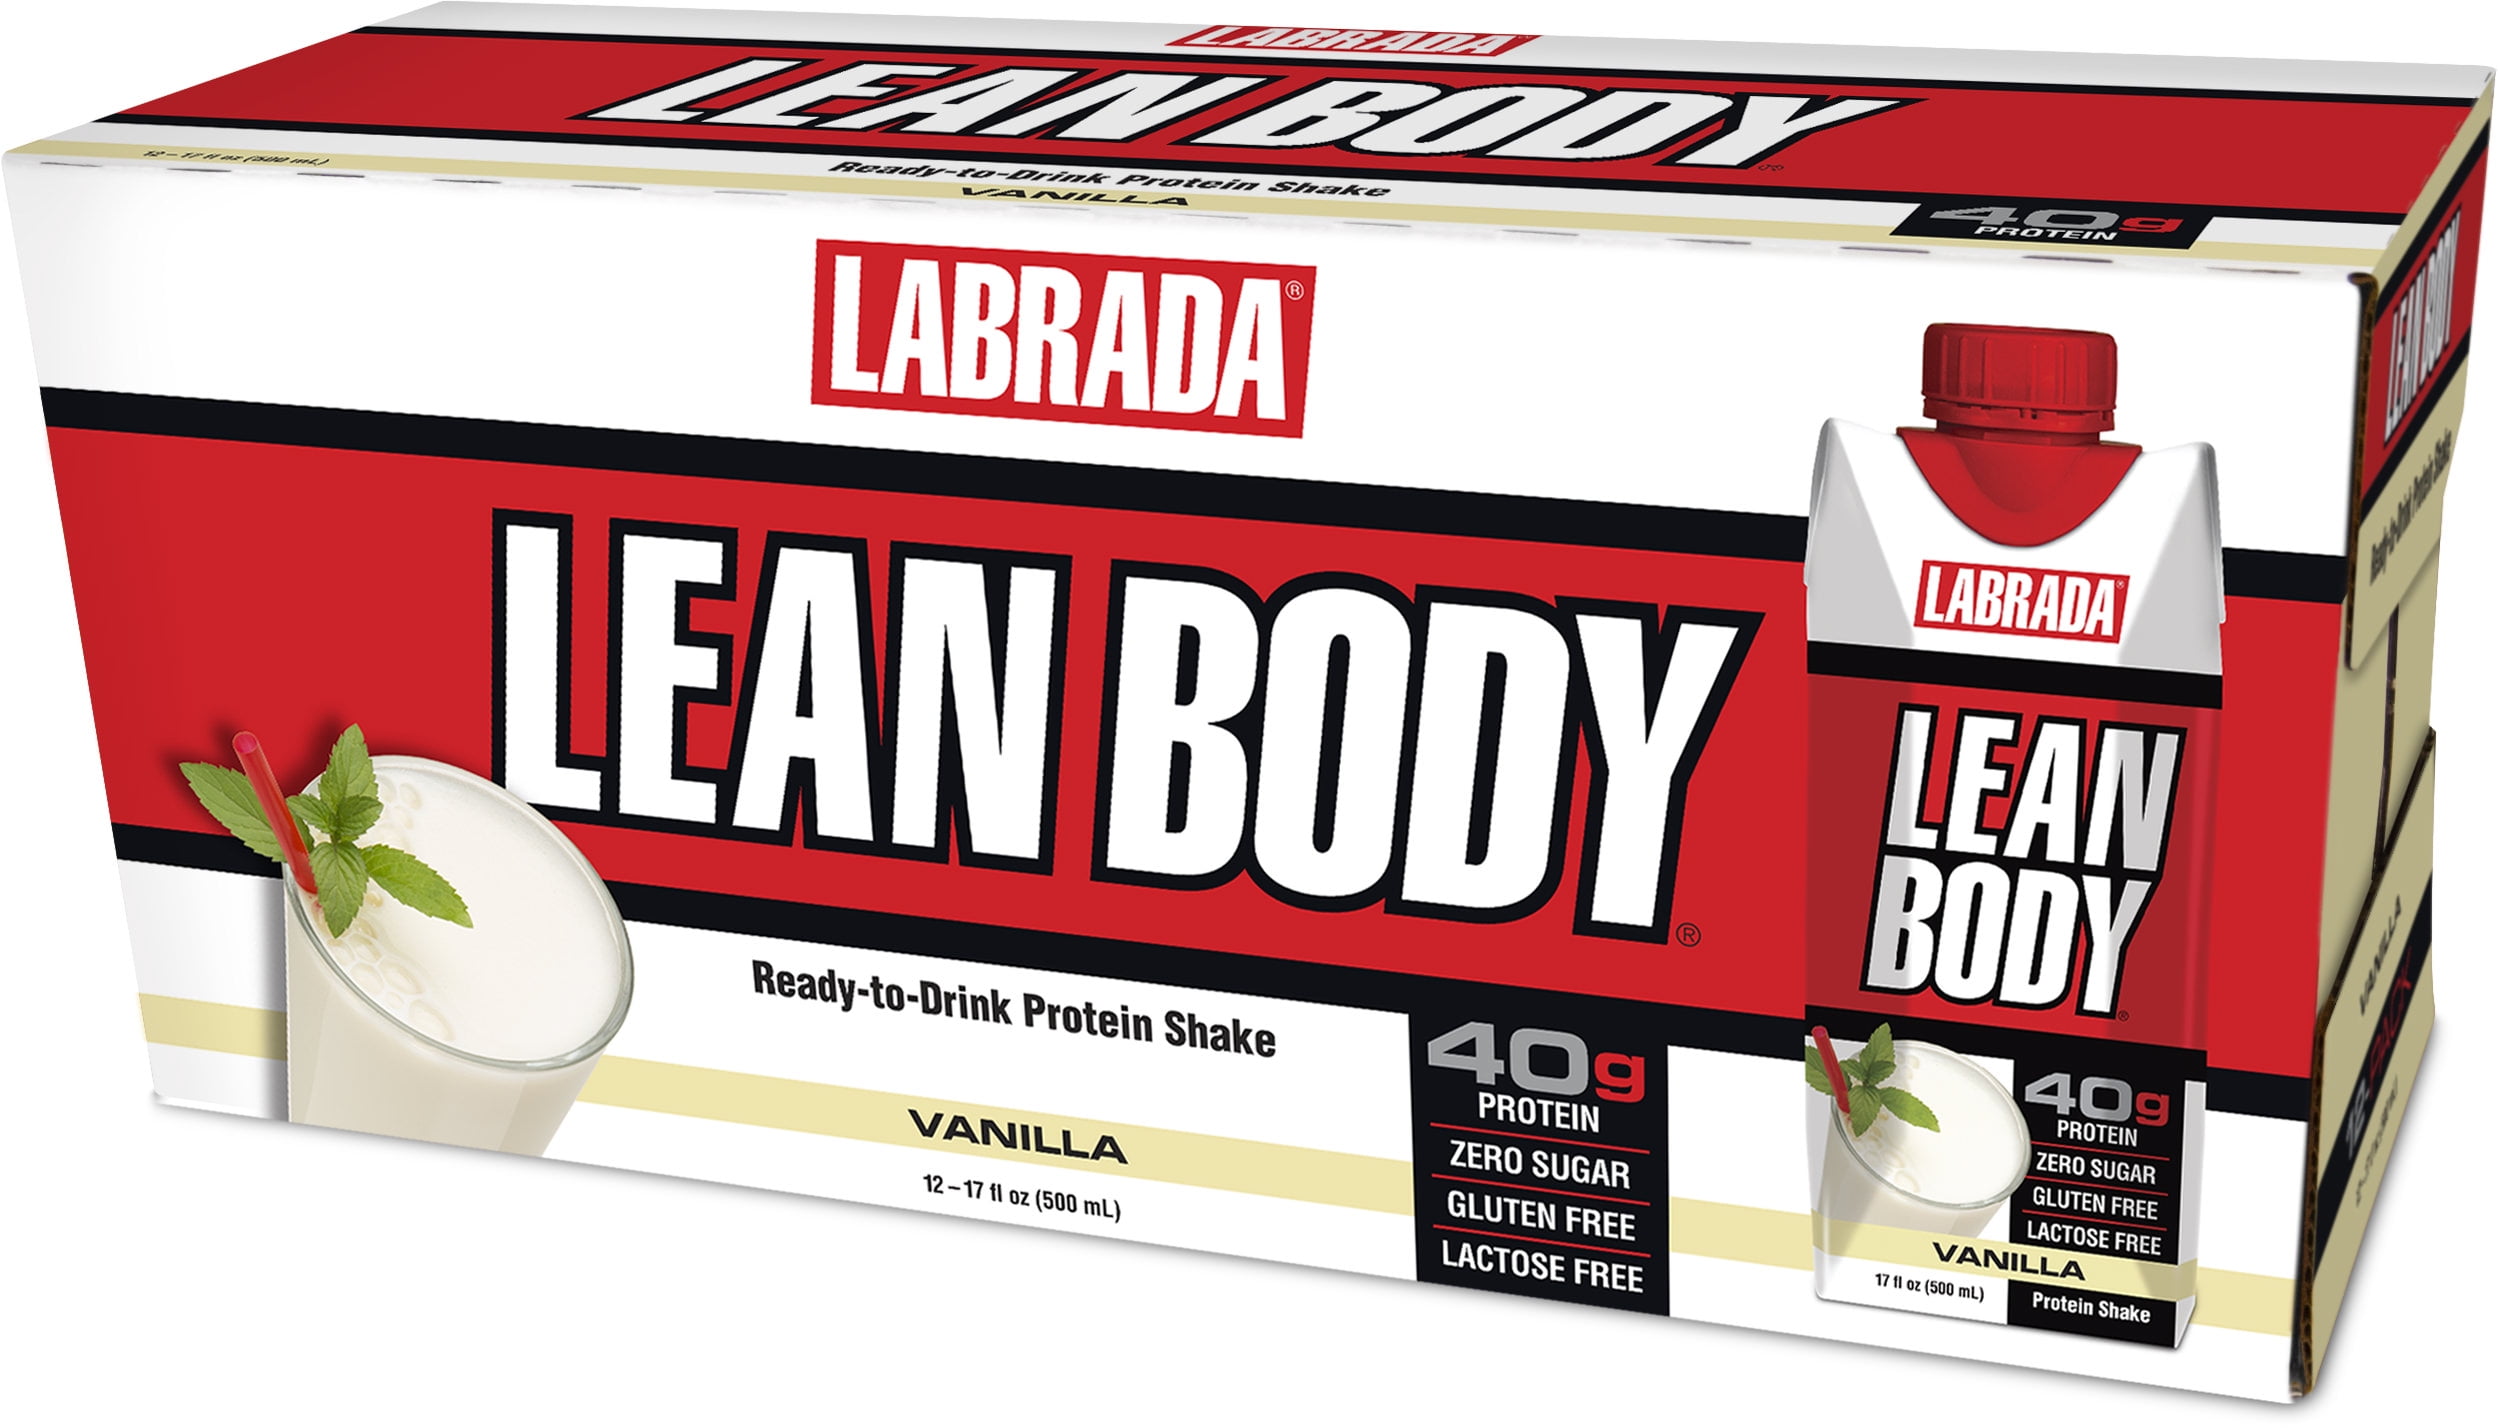 Labrada Lean Body Ready to Drink Protein Shakes, Vanilla, 40g